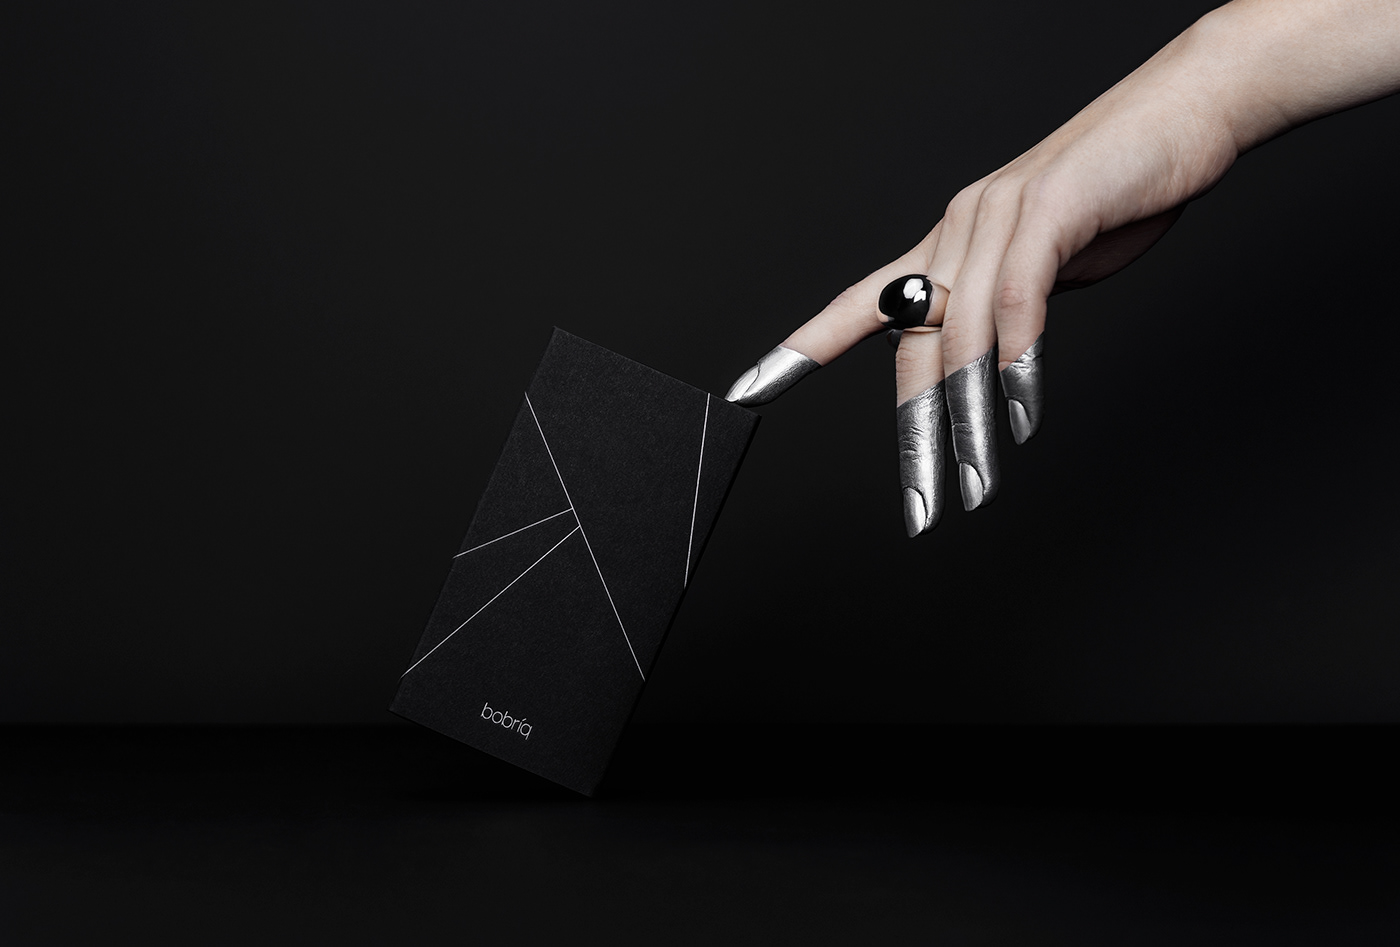 Jewellery jewlery Packaging geometric minimal abstract black branding  hands Fashion 